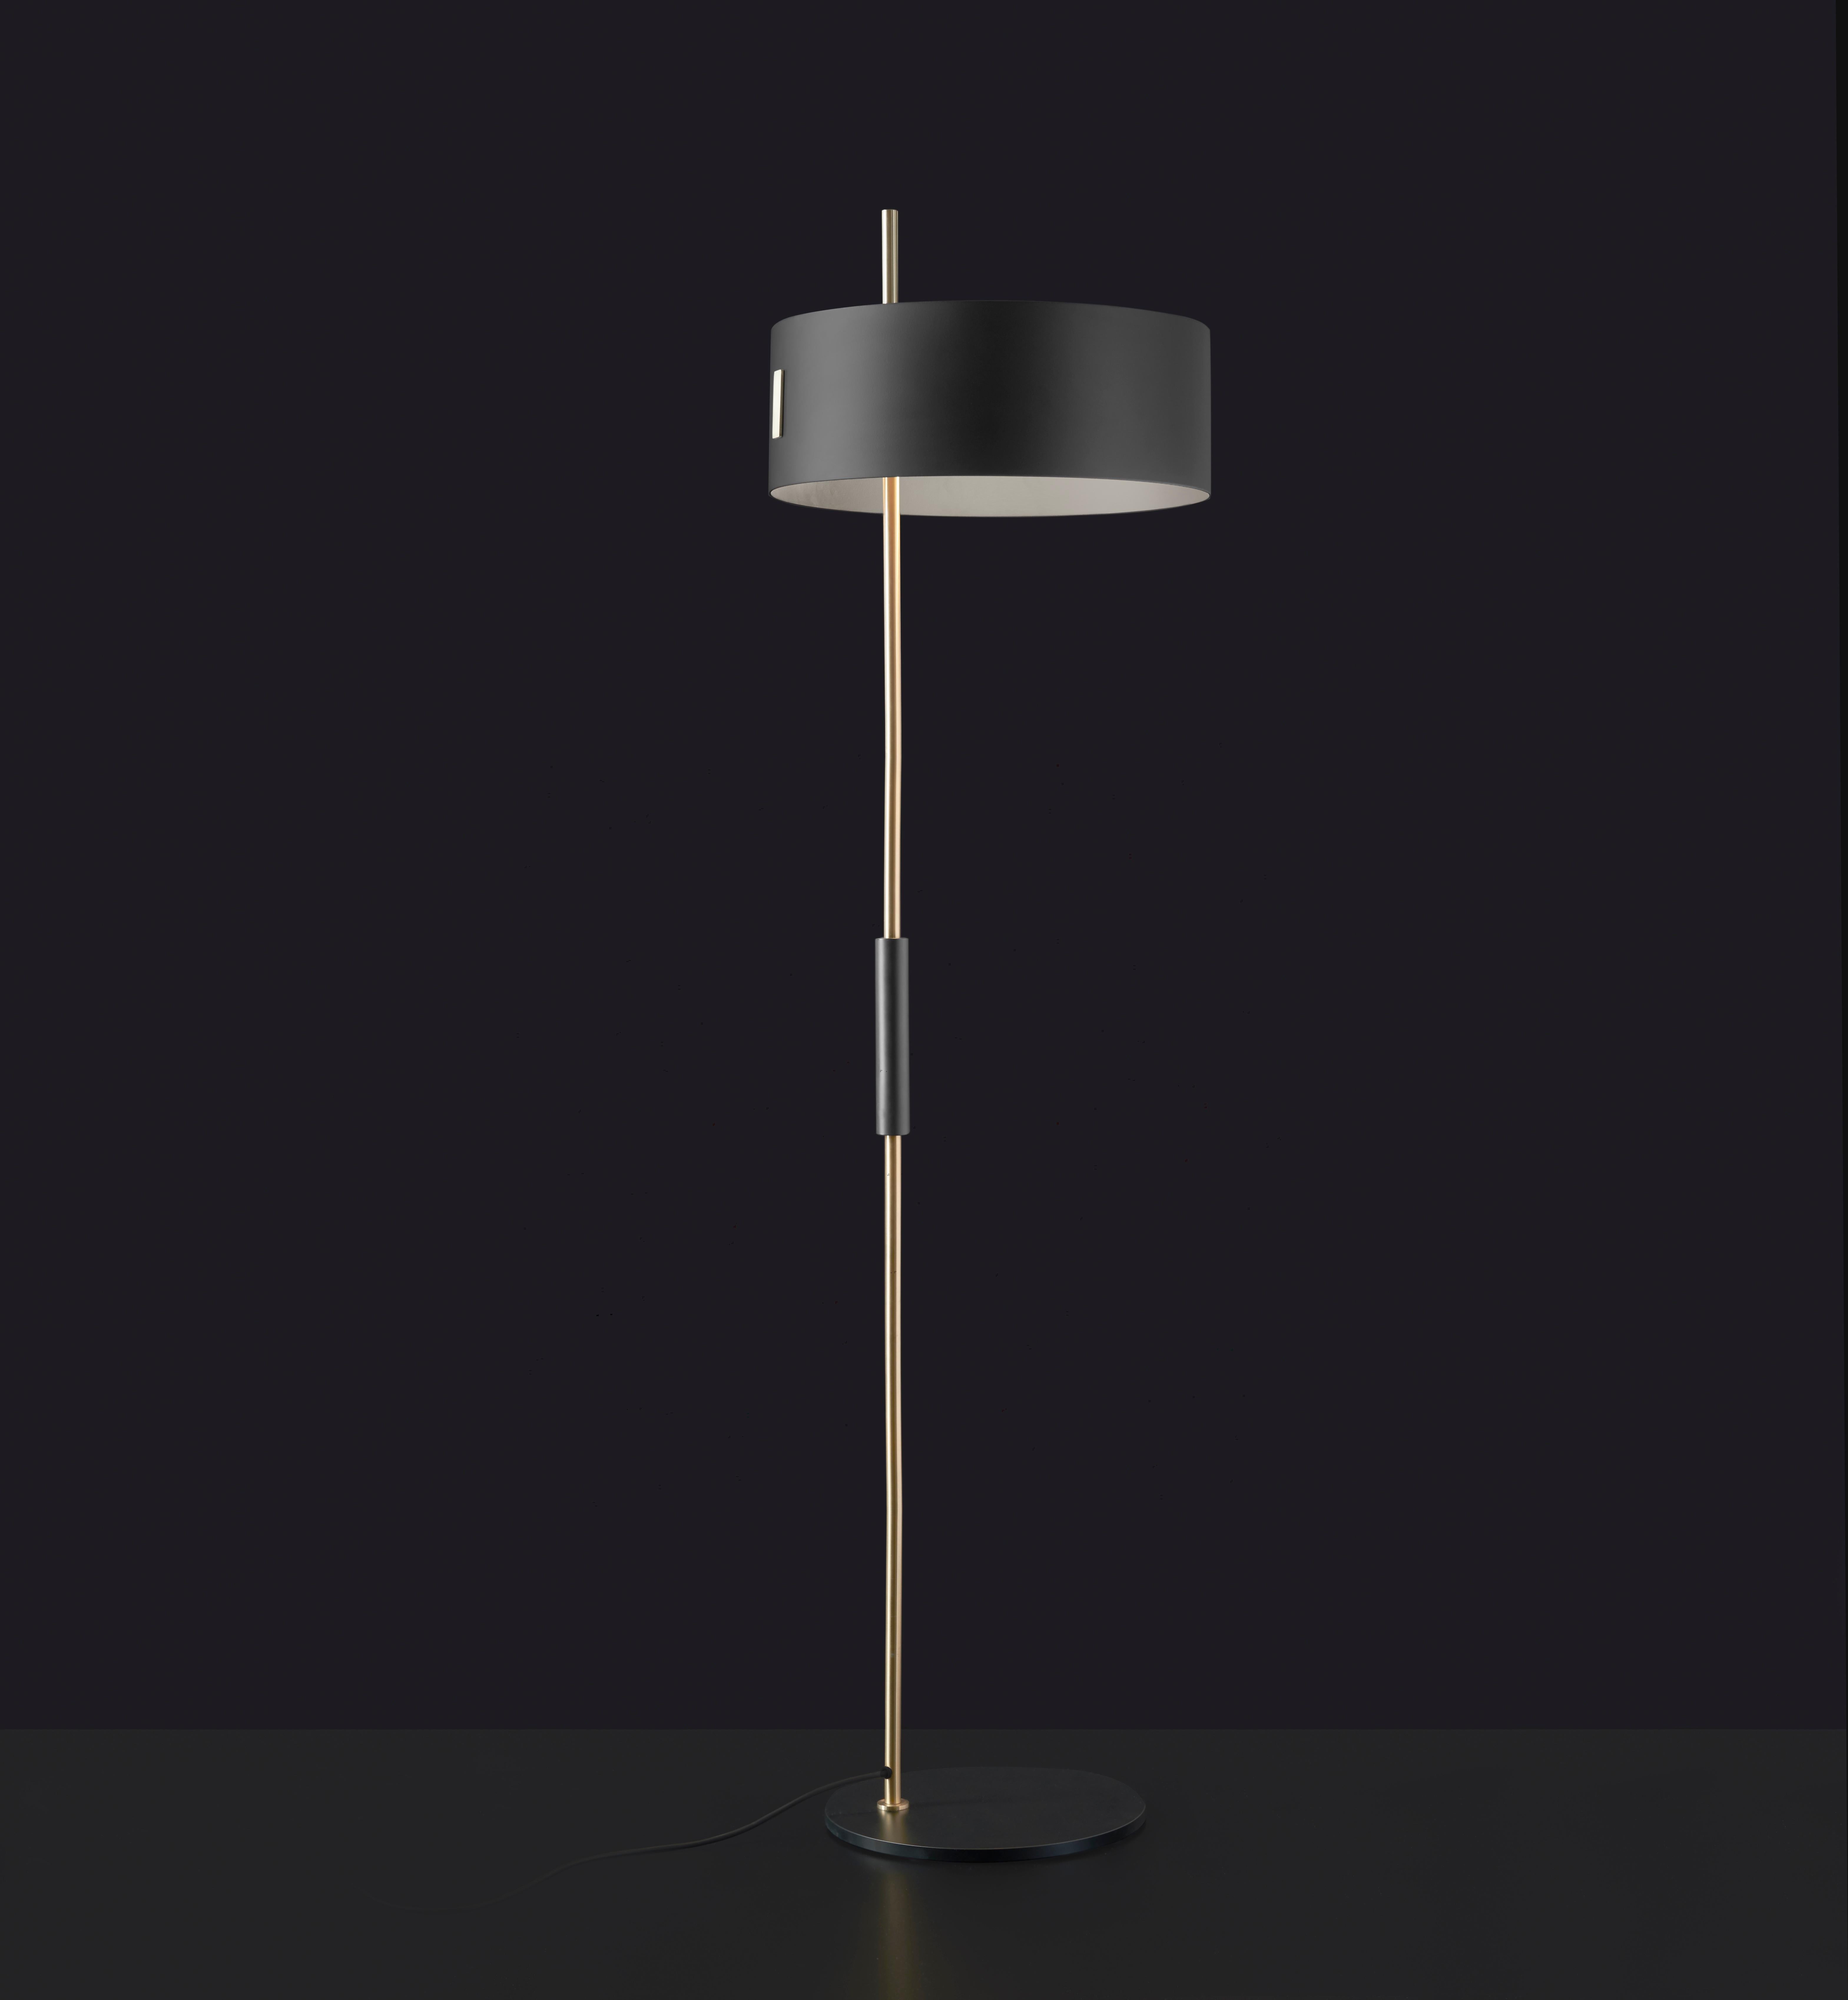 Mid-Century Modern '1953' Floor Lamp by Ostuni E Forti for Oluce For Sale